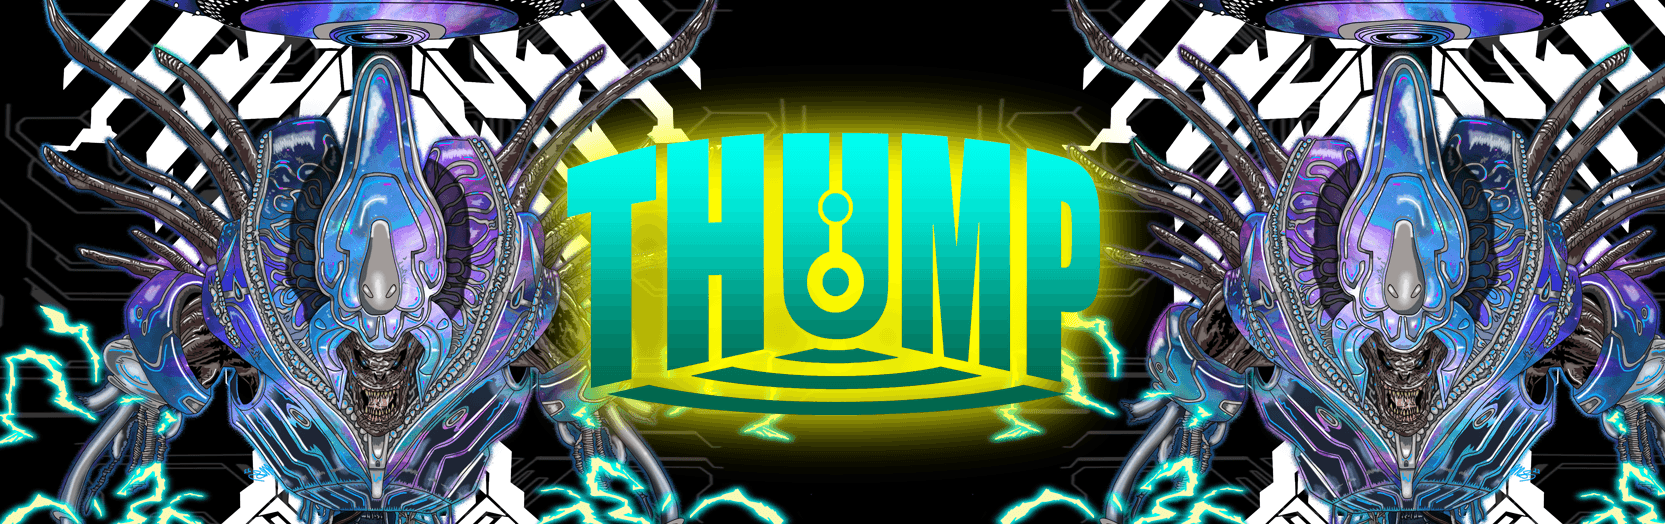 Thump Collection - Scott Atomic™ merchandise